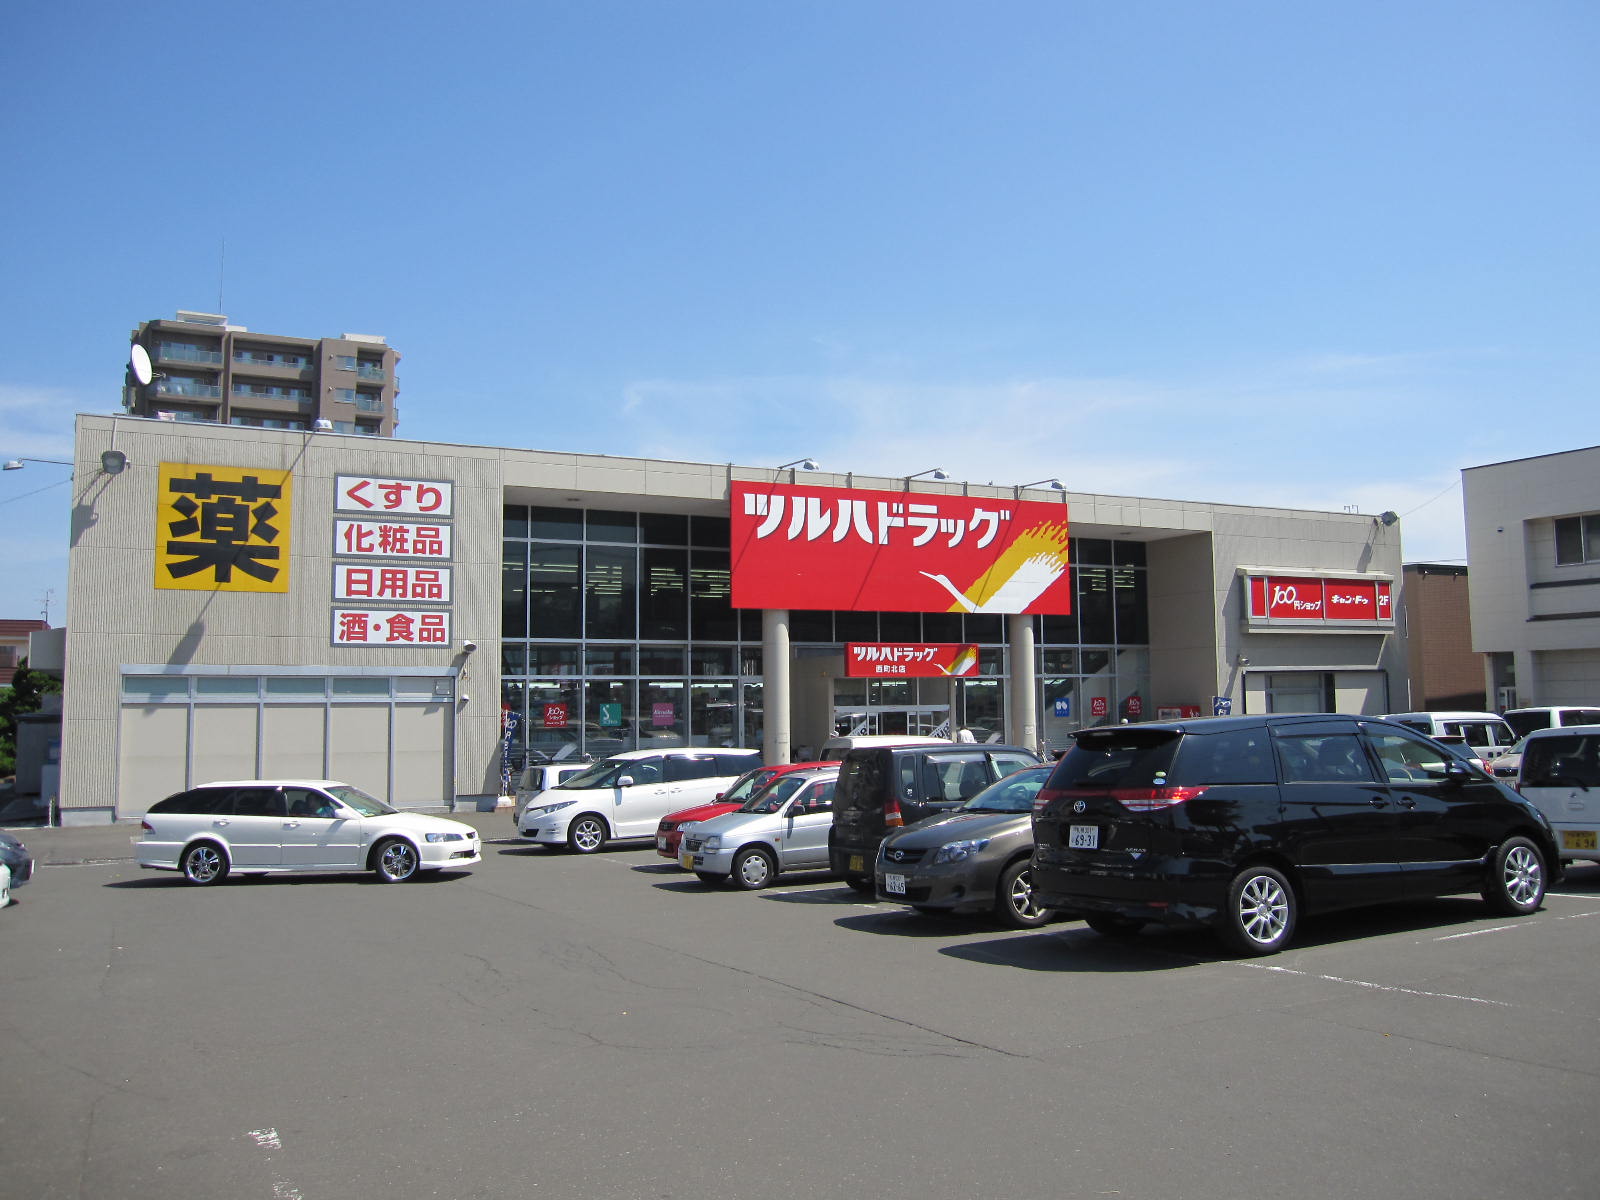 Dorakkusutoa. Pharmacy Tsuruha drag Nishimachi shop 590m until (drugstore)